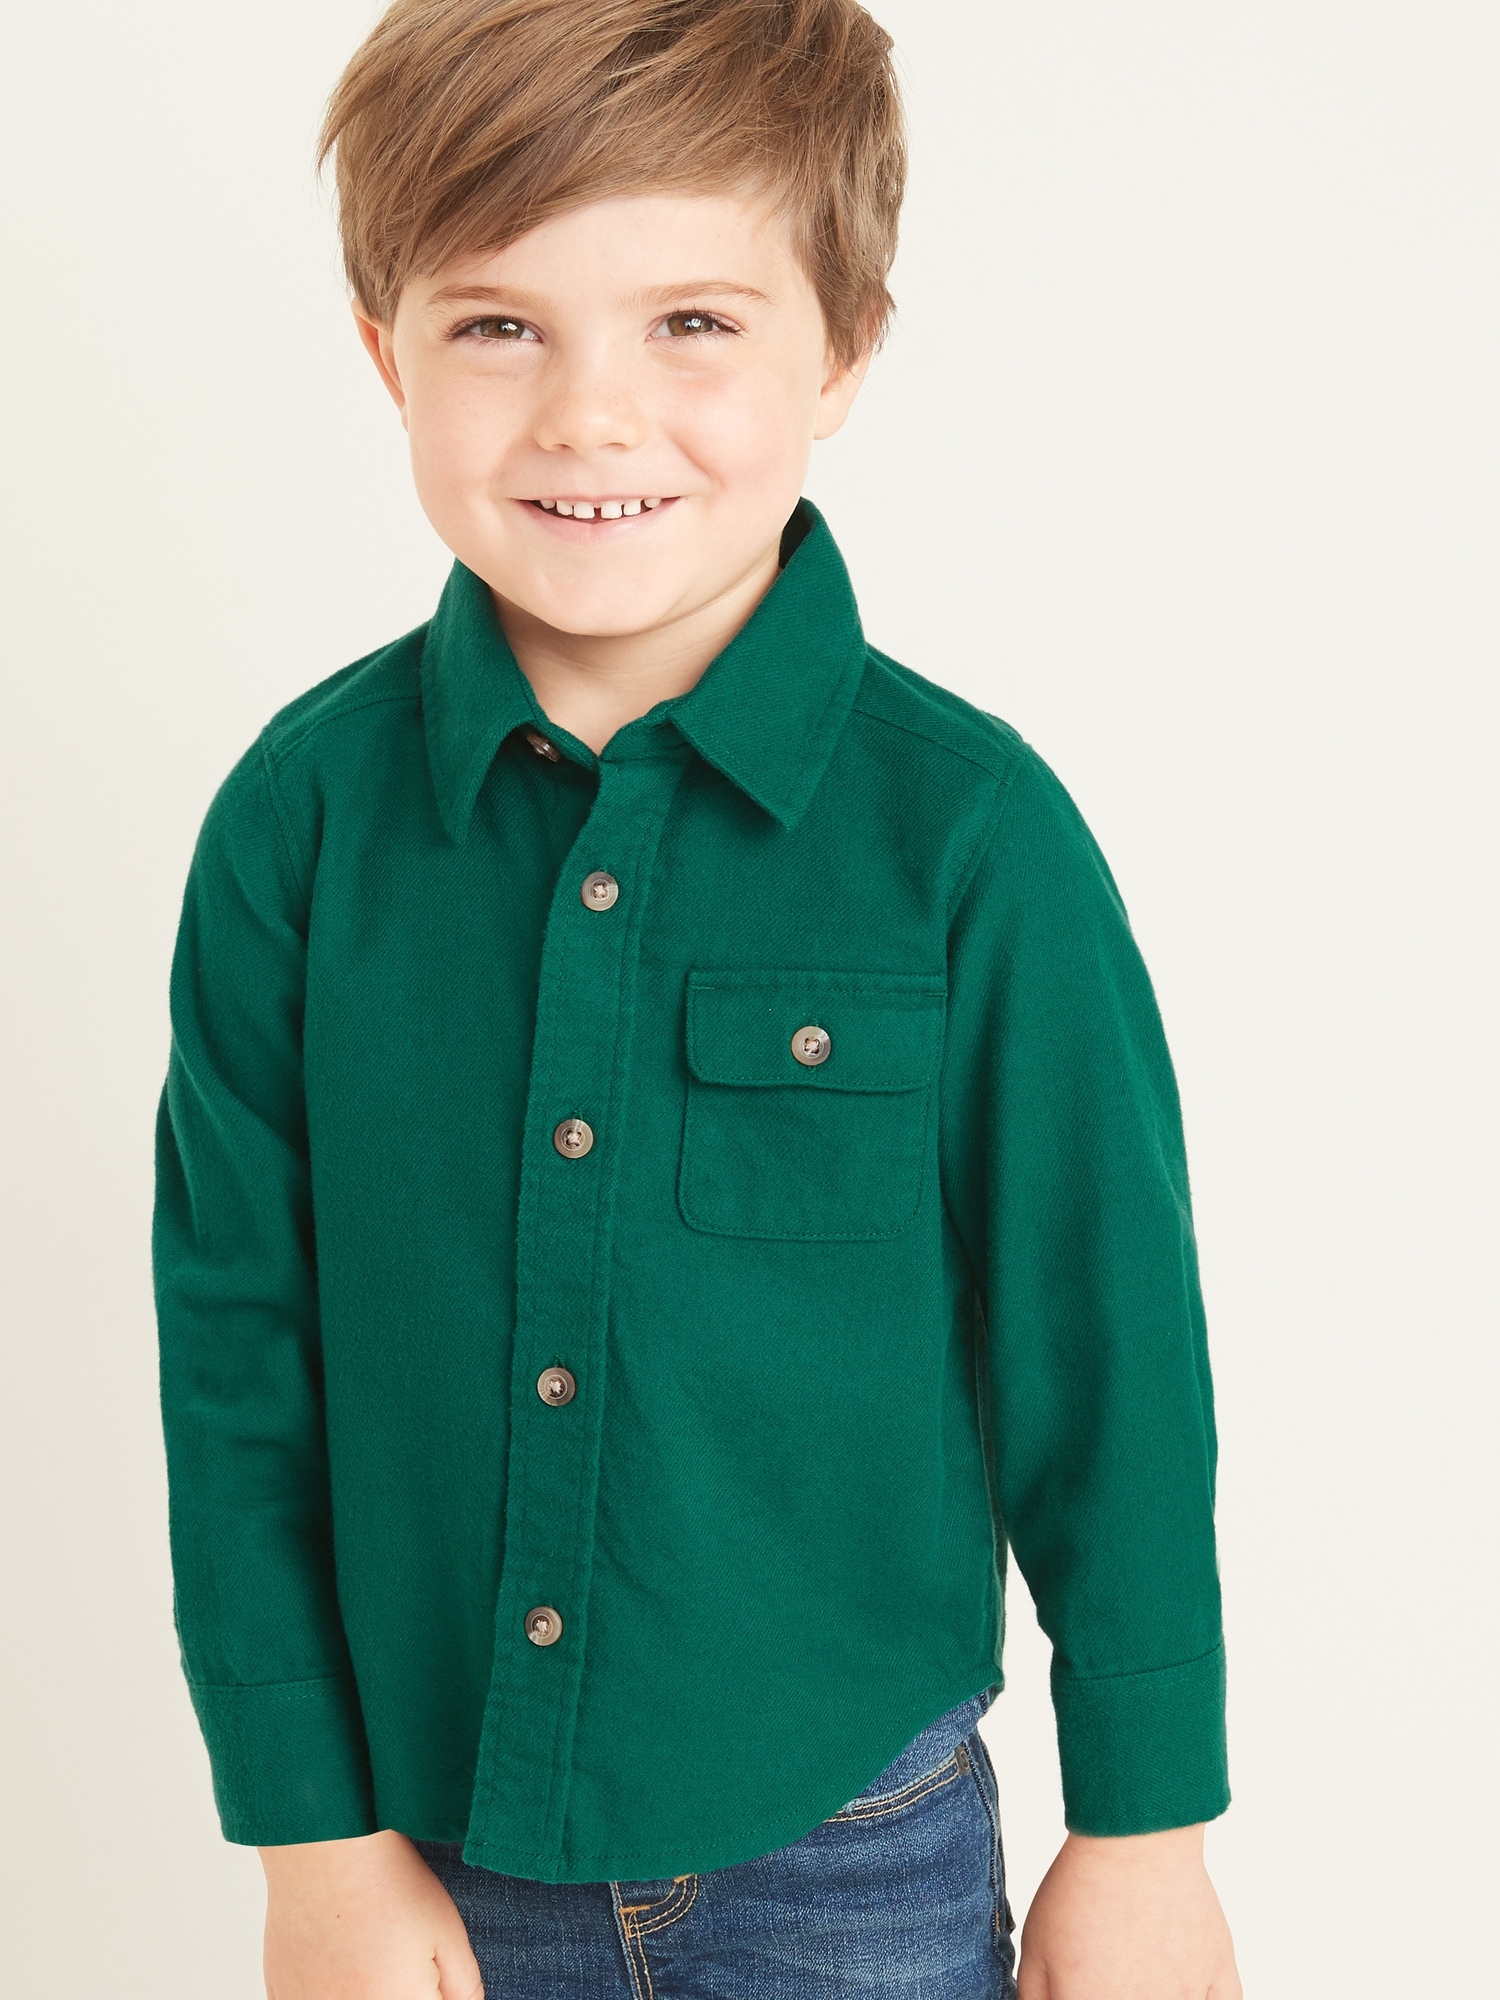 Flannel Chest-Pocket Shirt for Toddler Boys | Old Navy